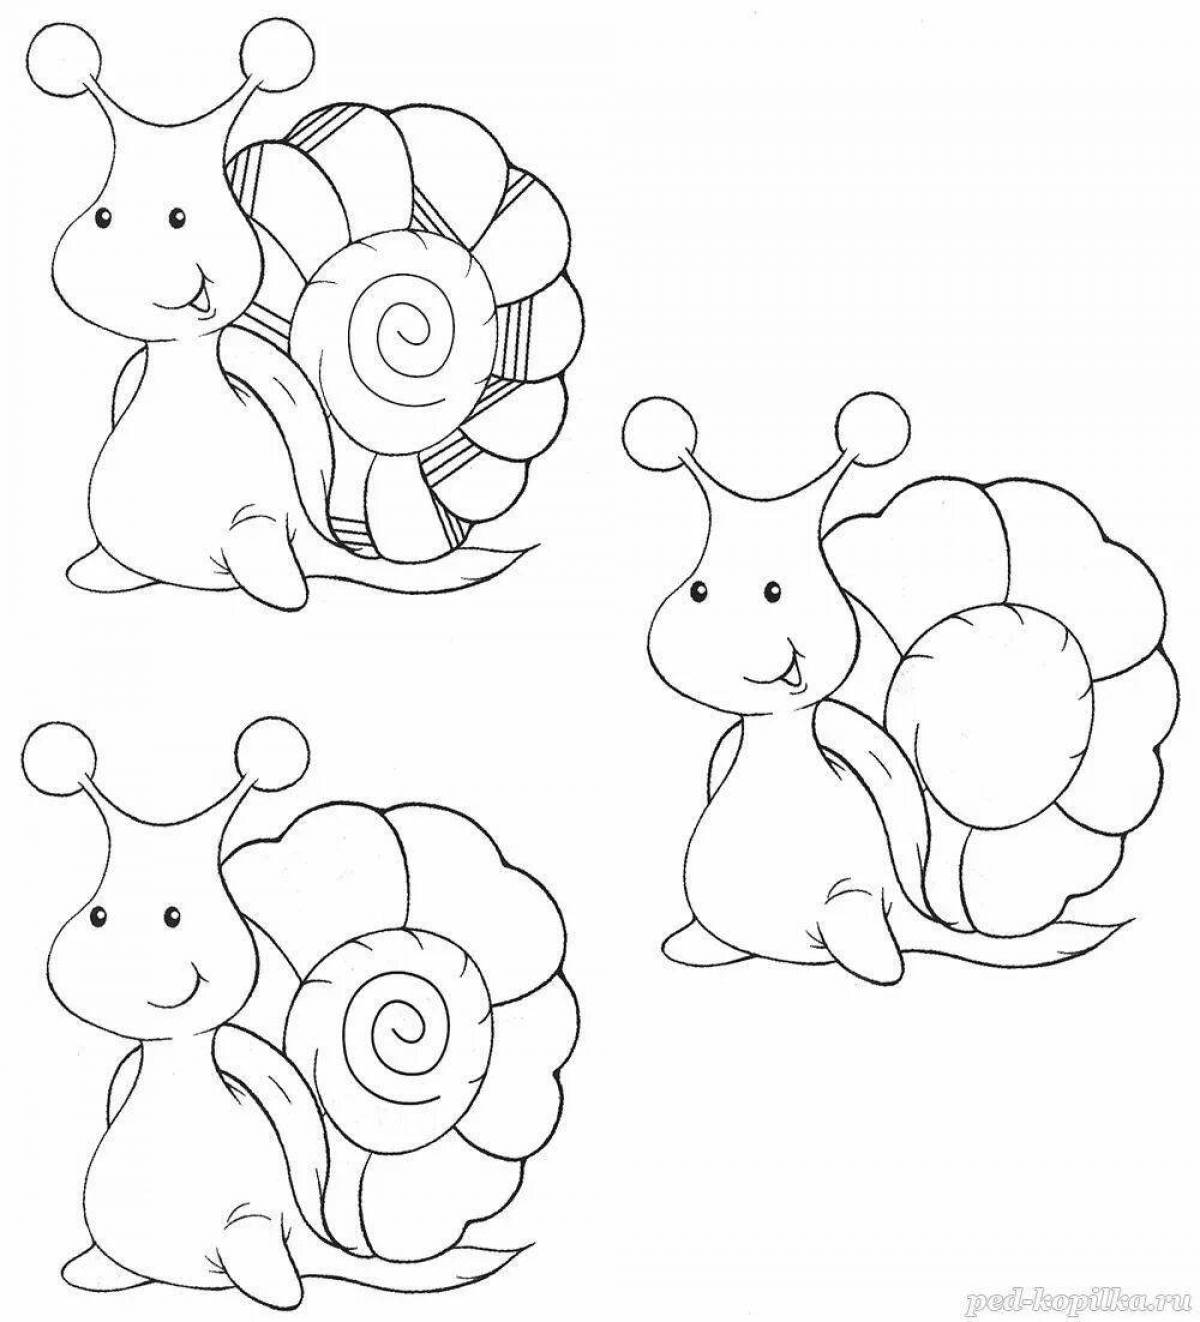 Fun coloring snail for kids